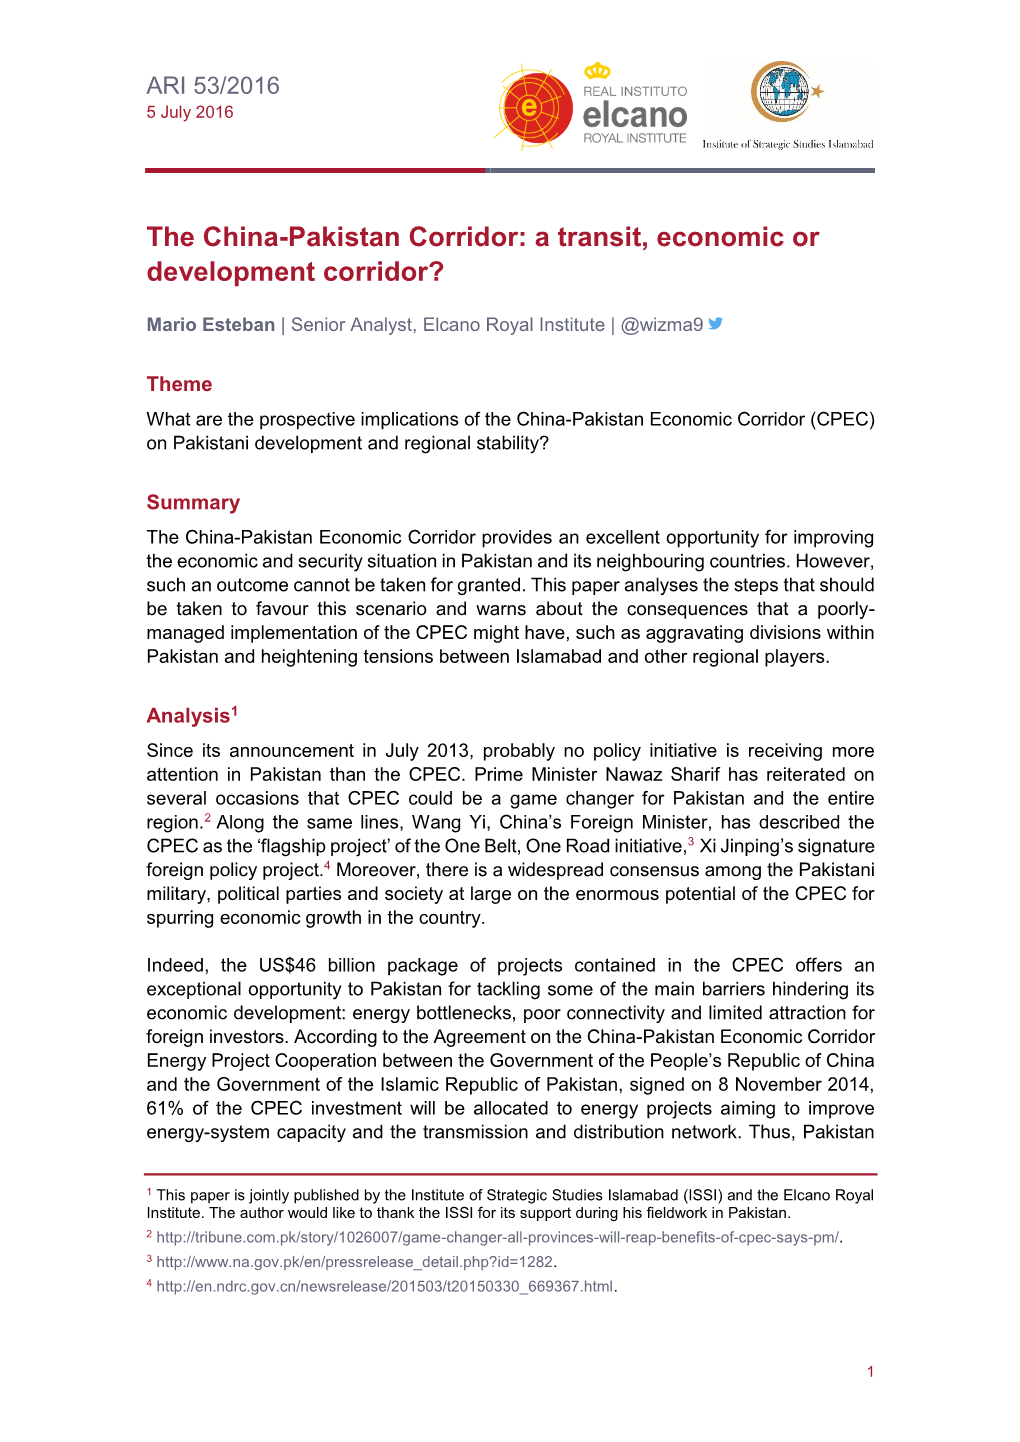 The China-Pakistan Corridor: a Transit, Economic Or Development Corridor?